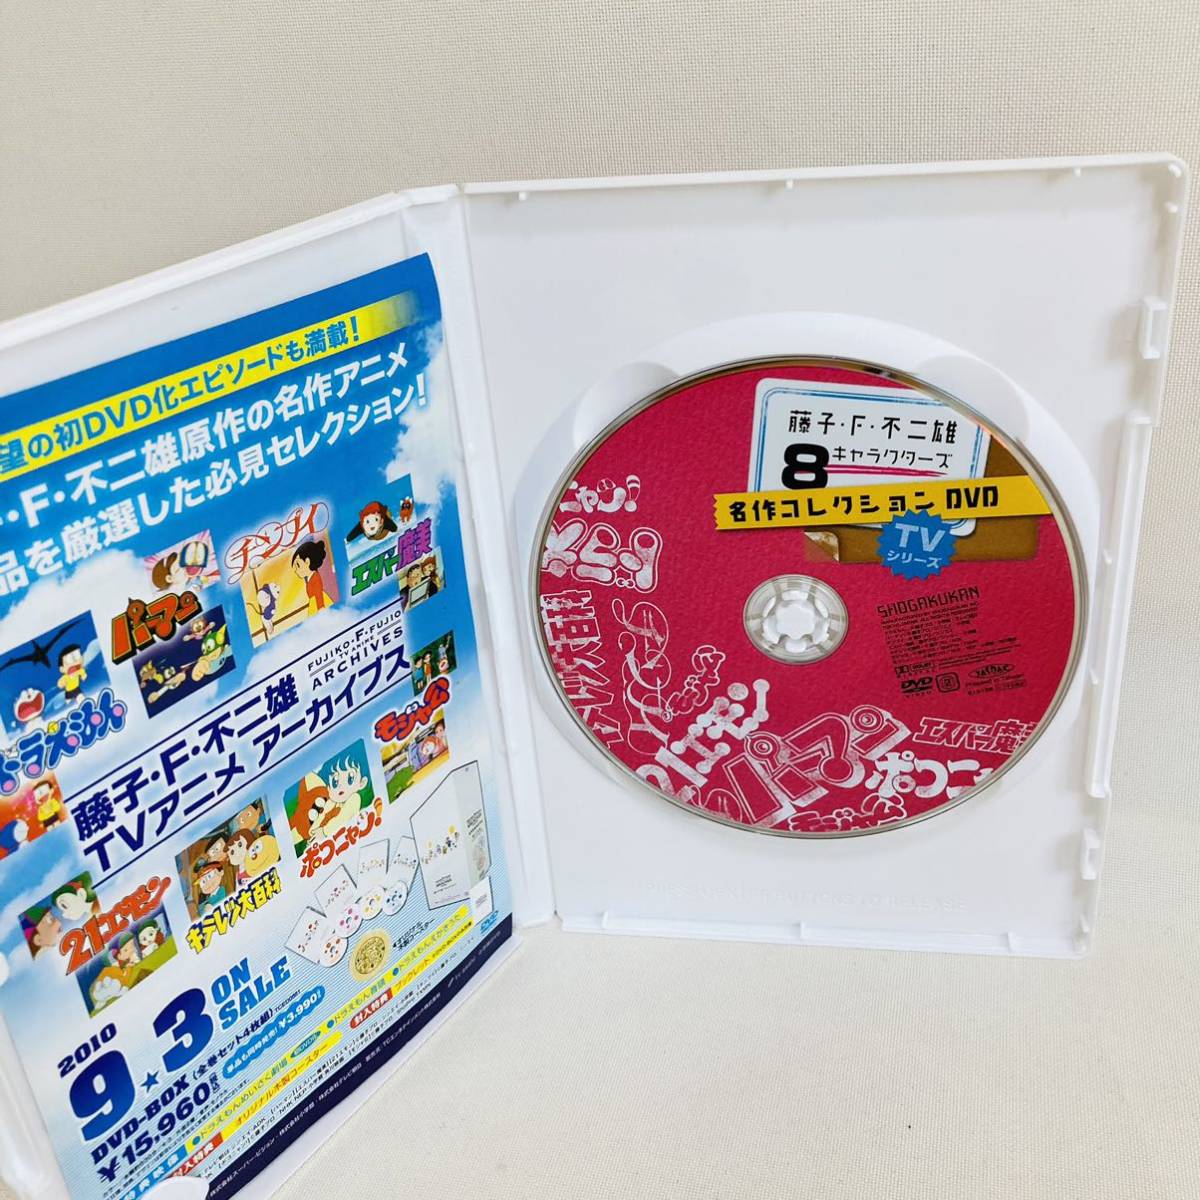 379. free shipping * wistaria .*F* un- two male DVD Doraemon perm n Esper Mami kiteretsu large various subjects chin pi8 character z regular goods 